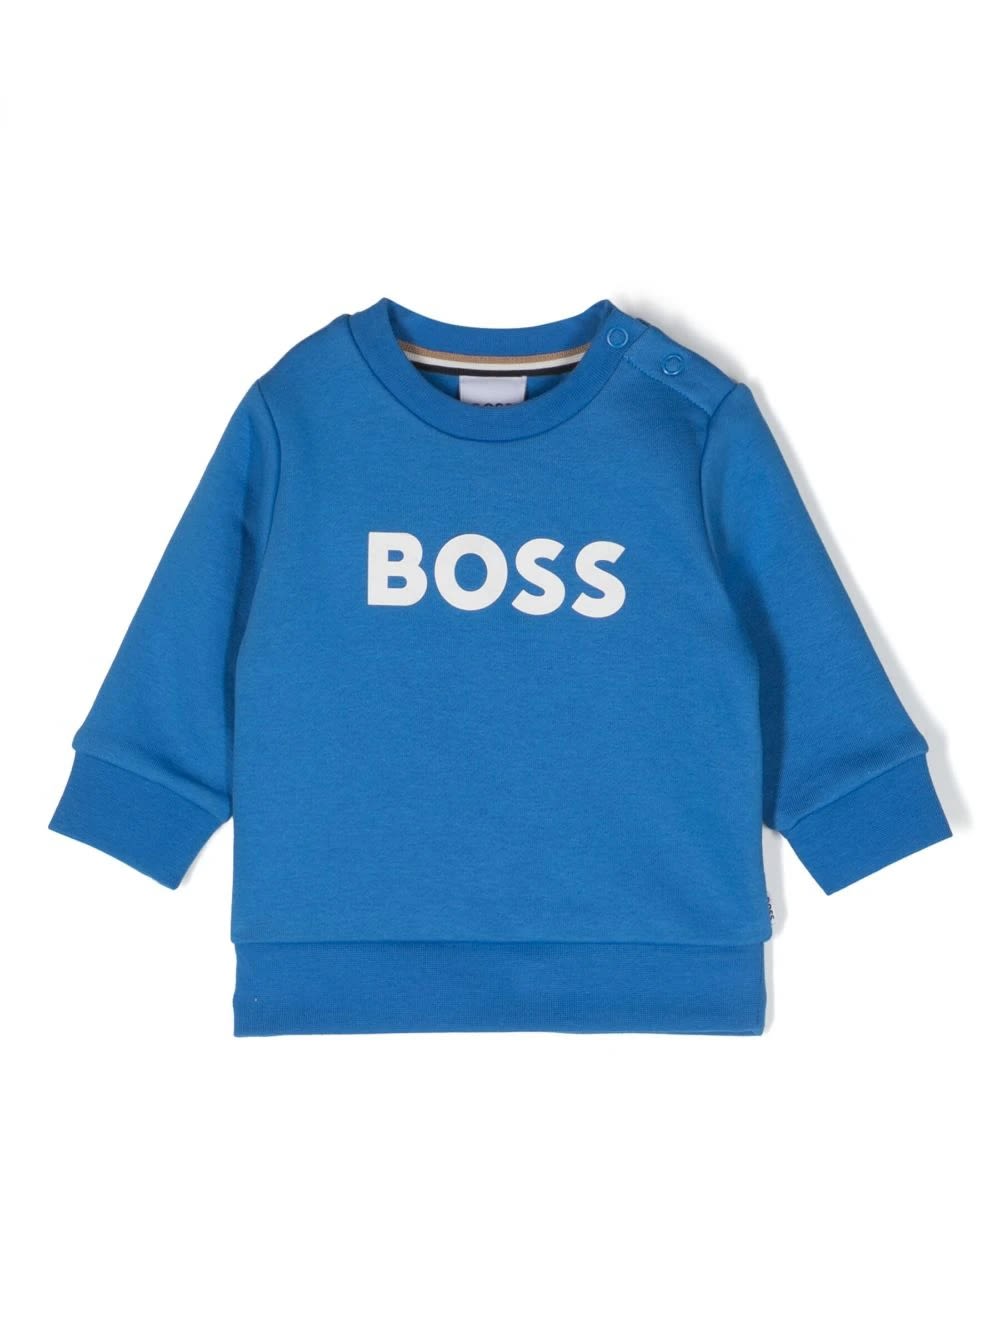 Hugo Boss Babies' Sweatshirt With Print In Blue